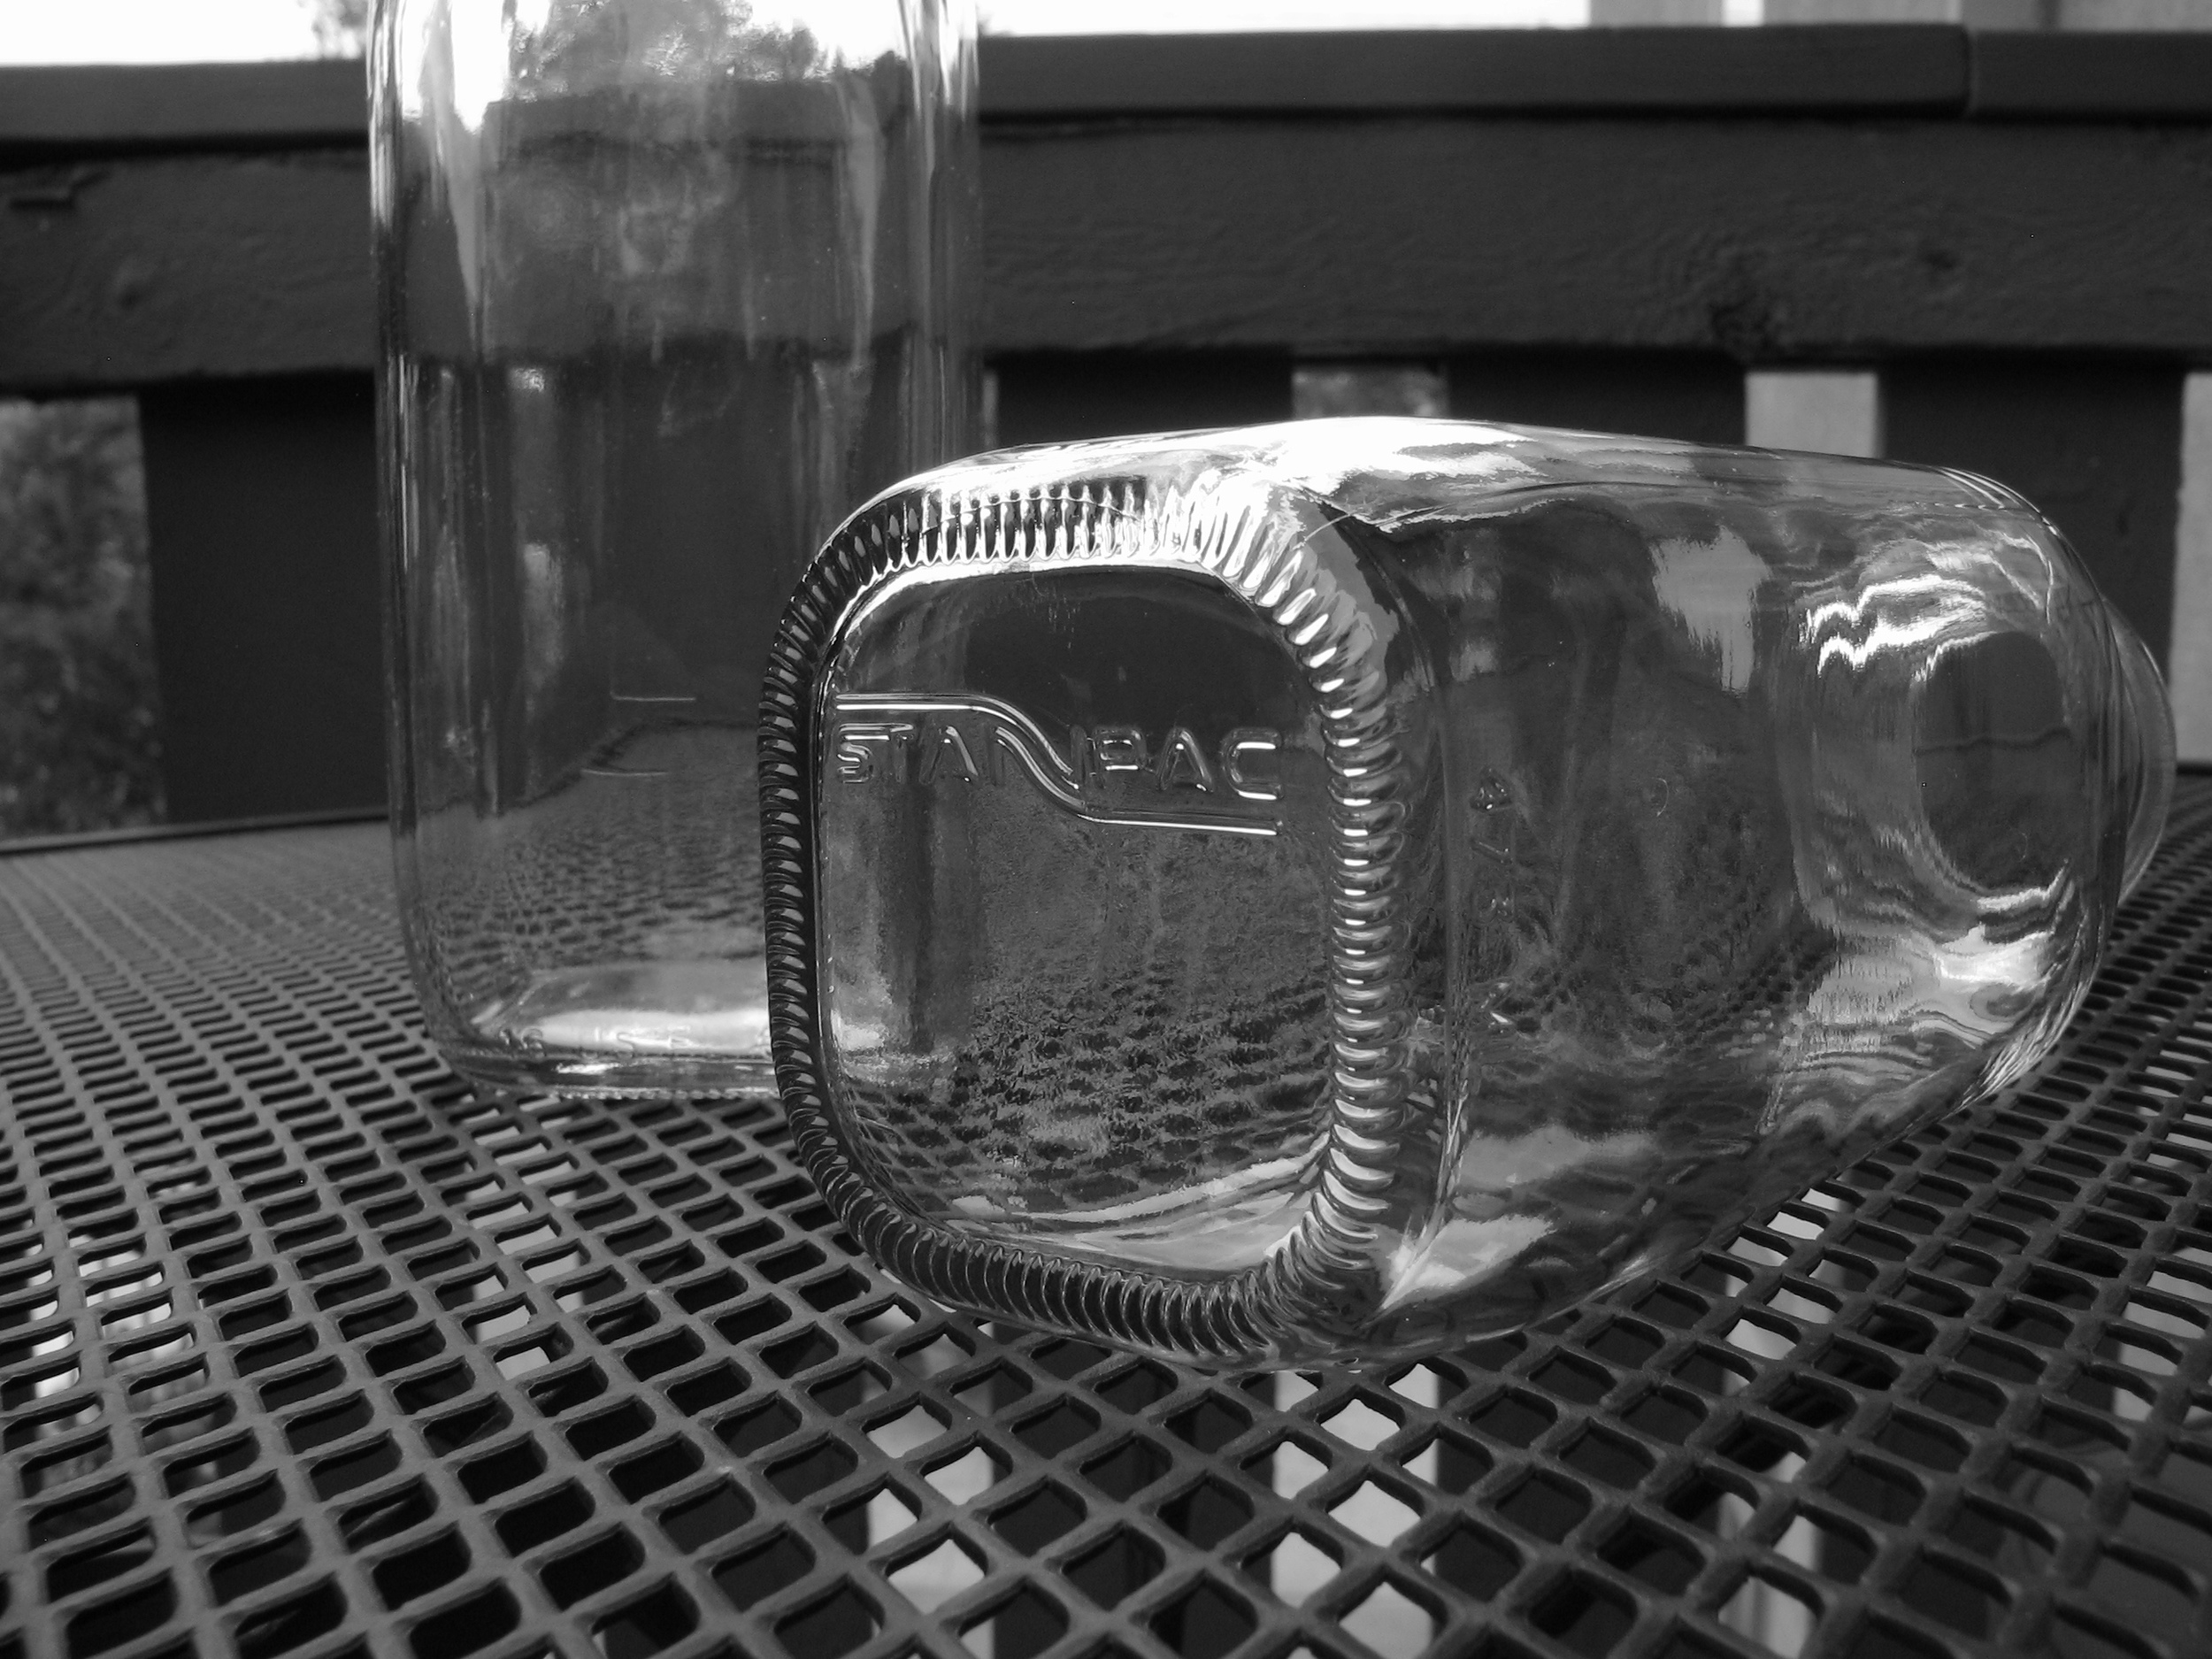 4.7 Ounce (140ml) Glass Jar - Stanpac